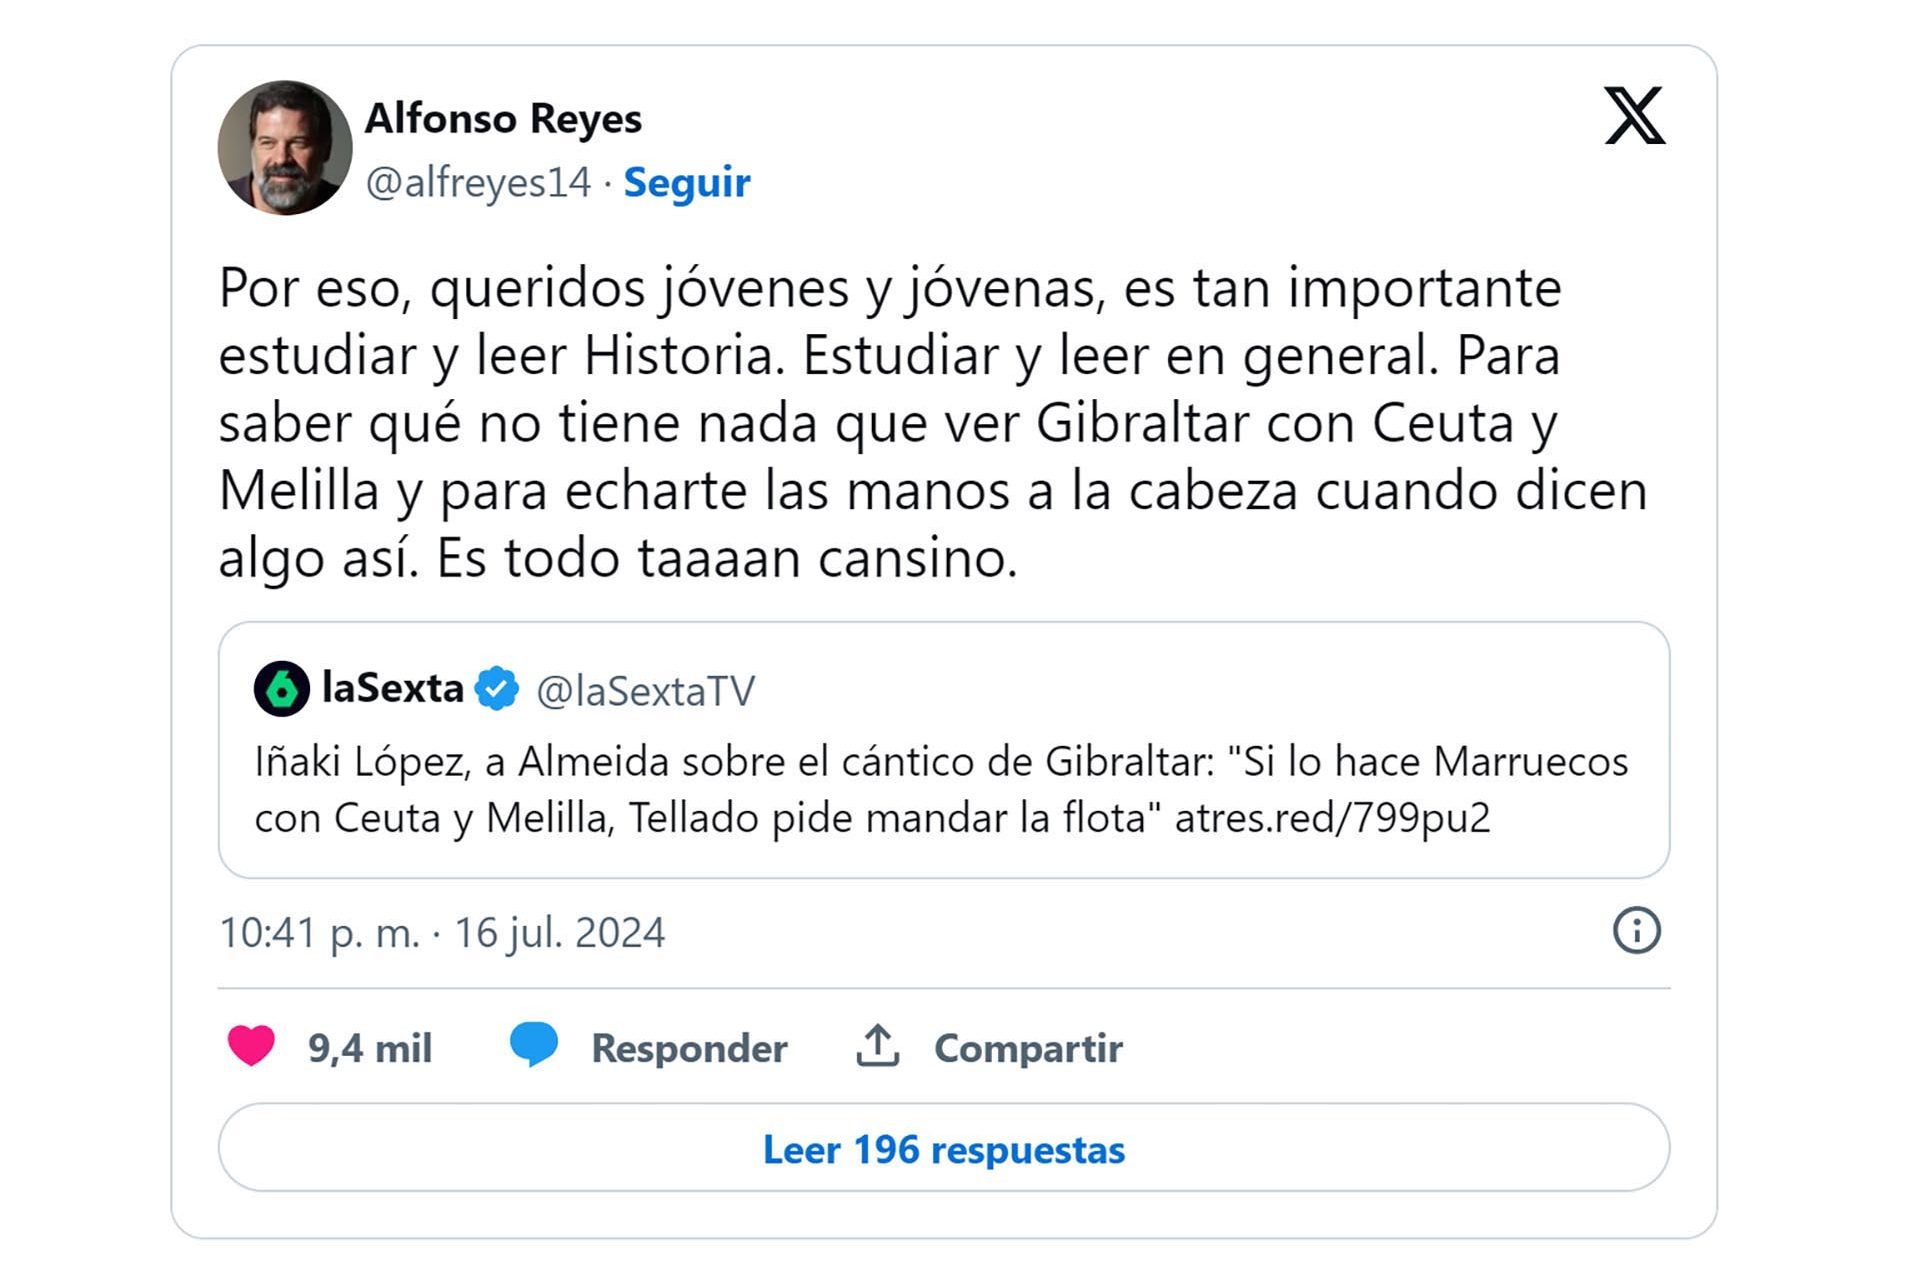 Réplica airada de Reyes contra el periodista